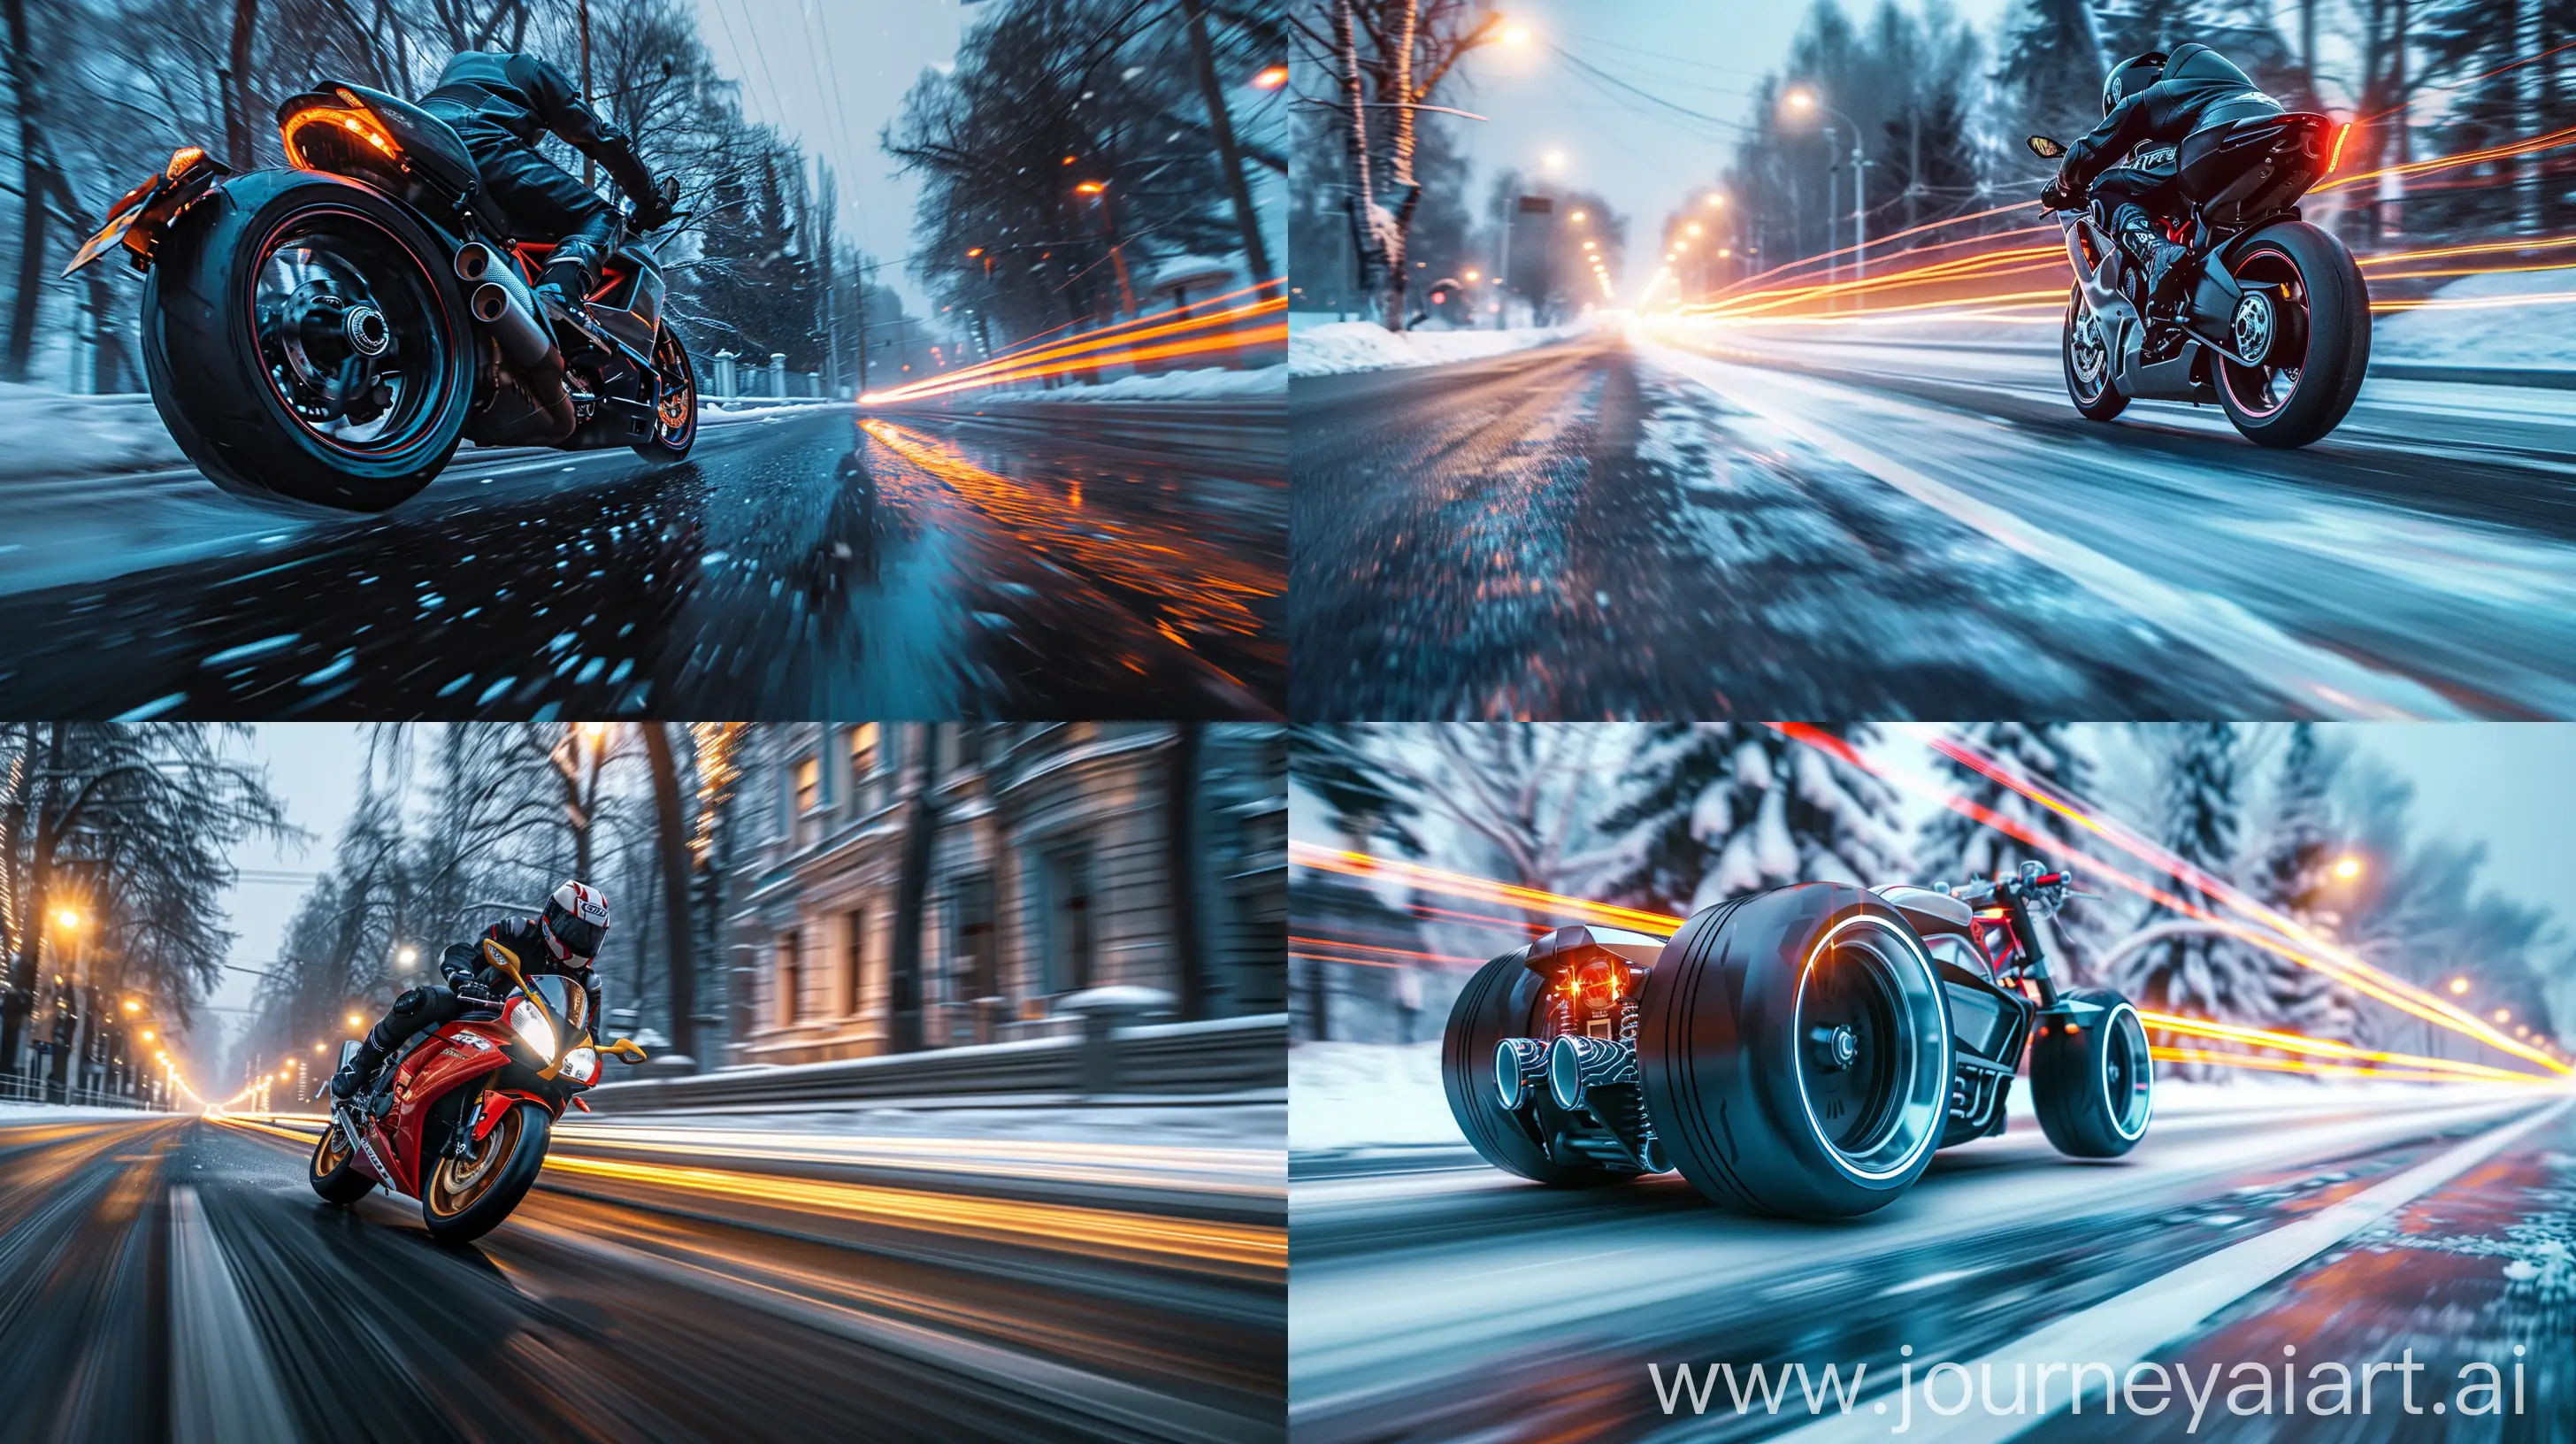 HighSpeed-Super-Bike-Racing-through-Winter-Twilight-Streets